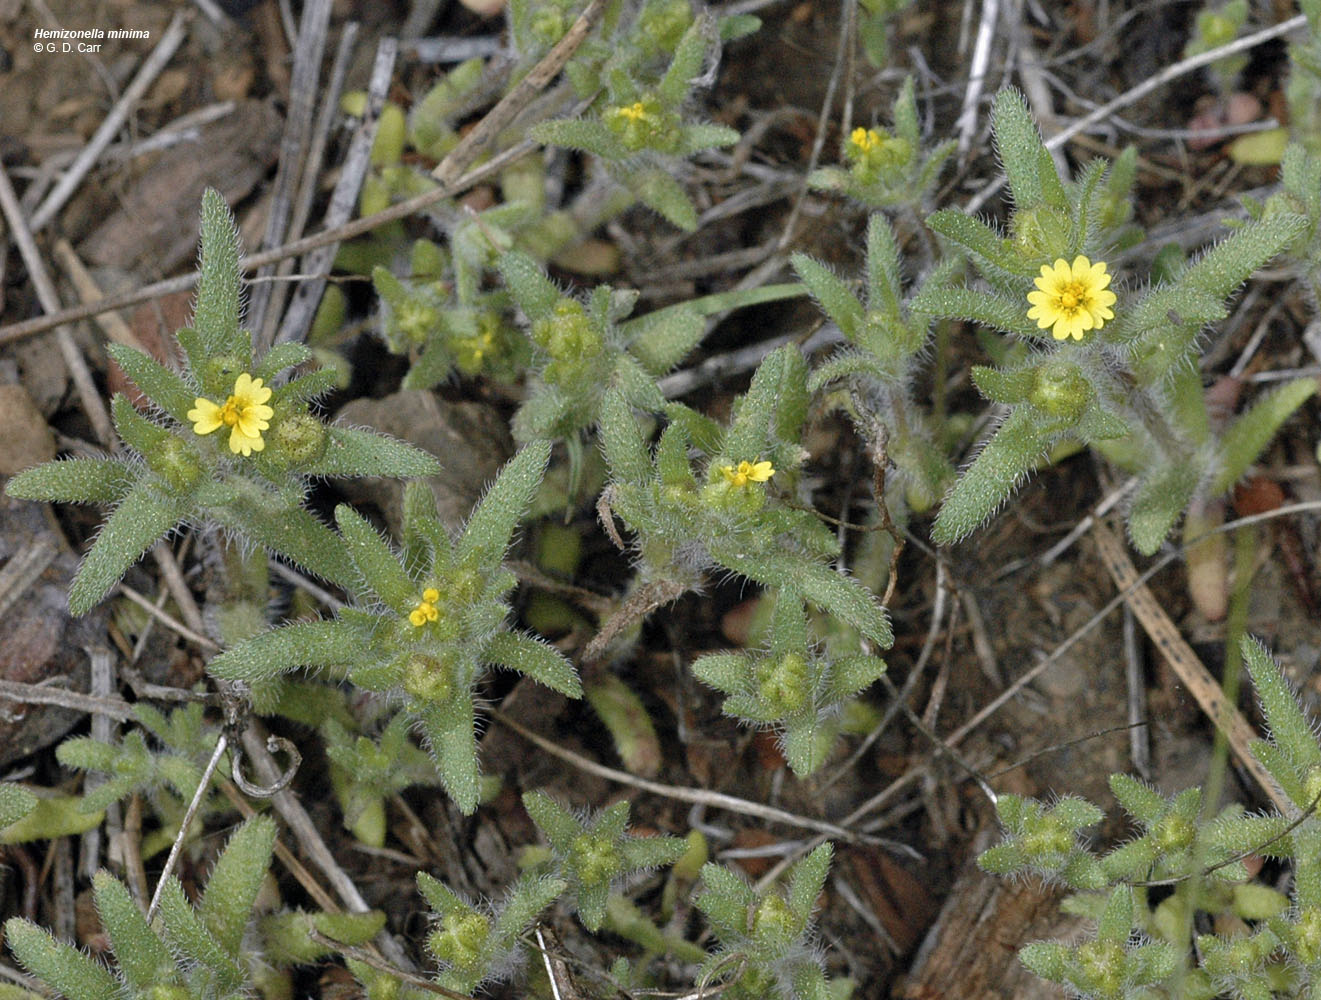 Flora of Eastern Washington Image: Hemizonella minima